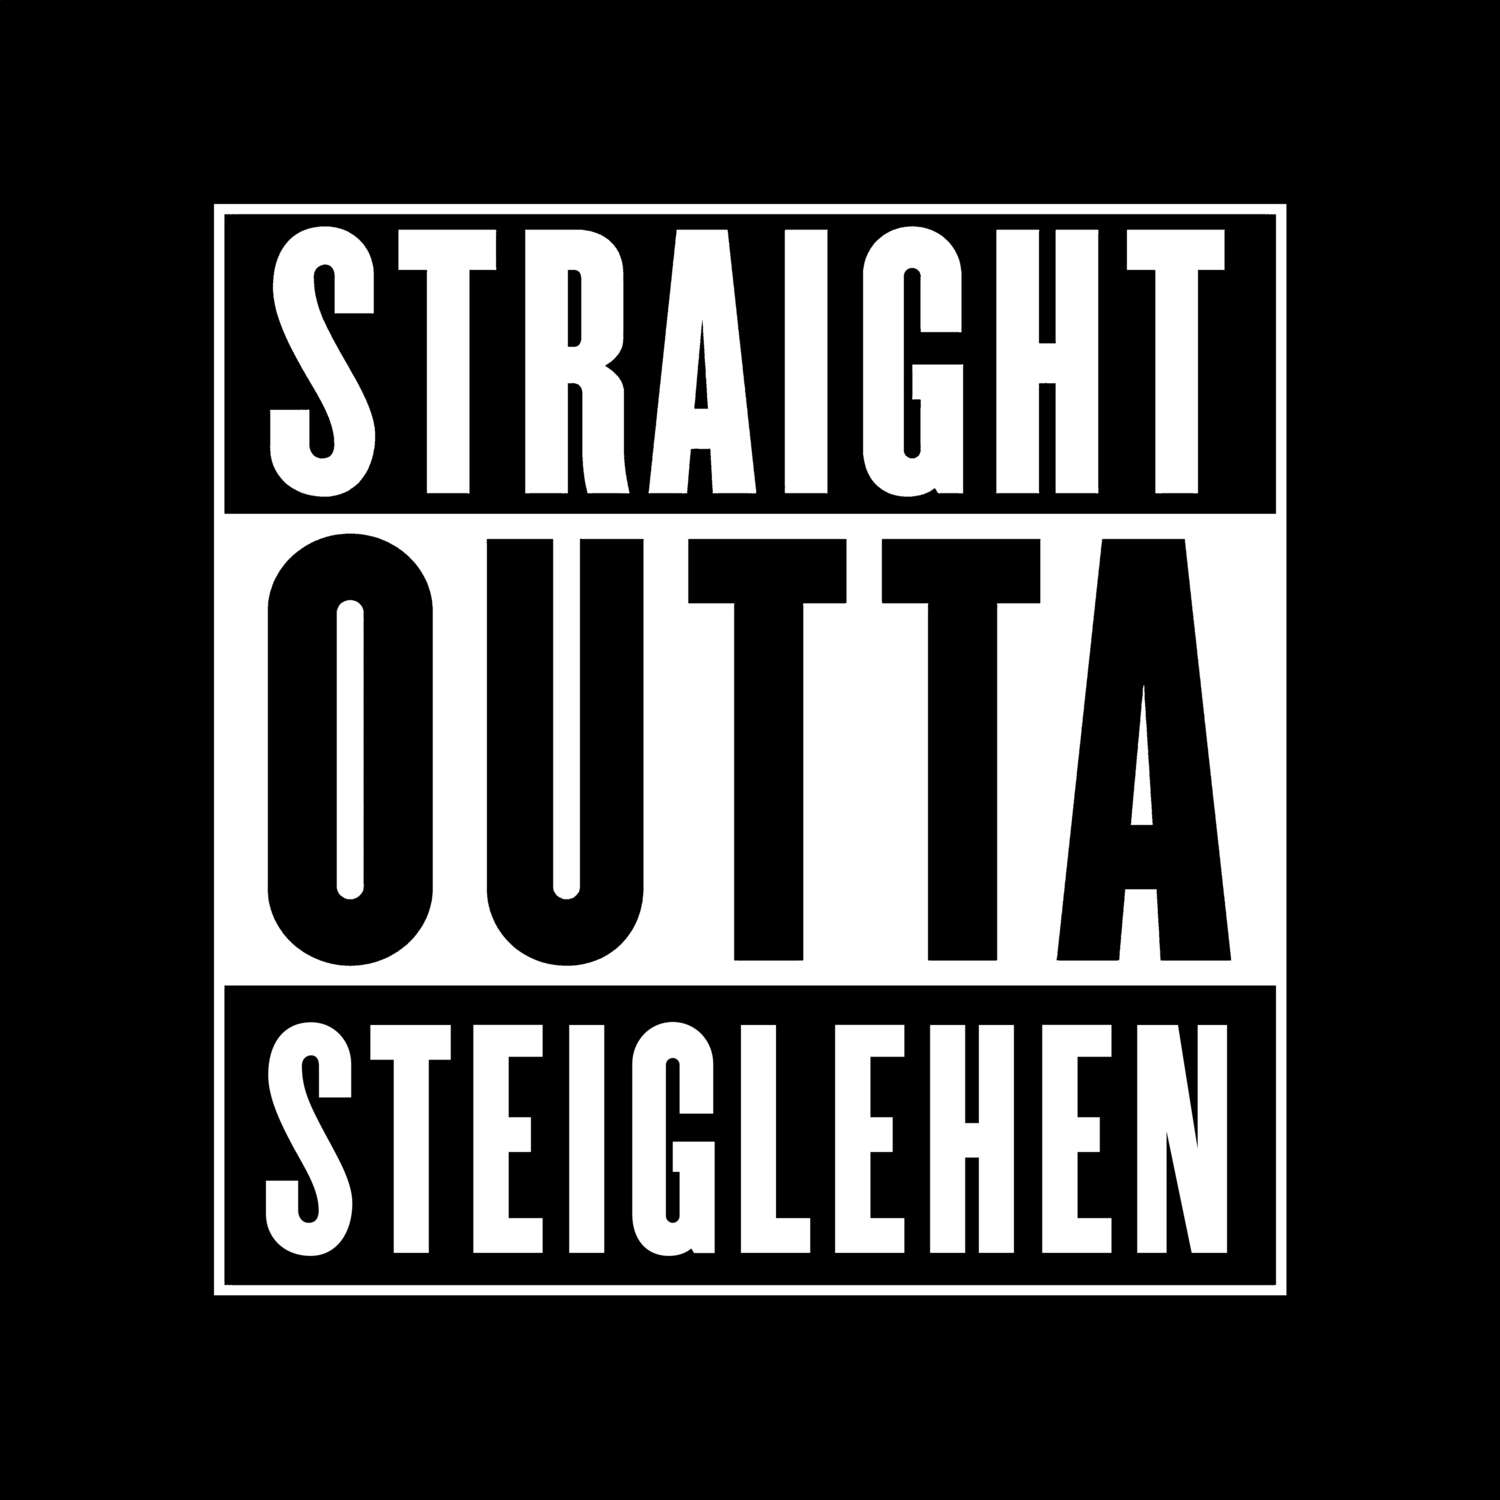 Steiglehen T-Shirt »Straight Outta«